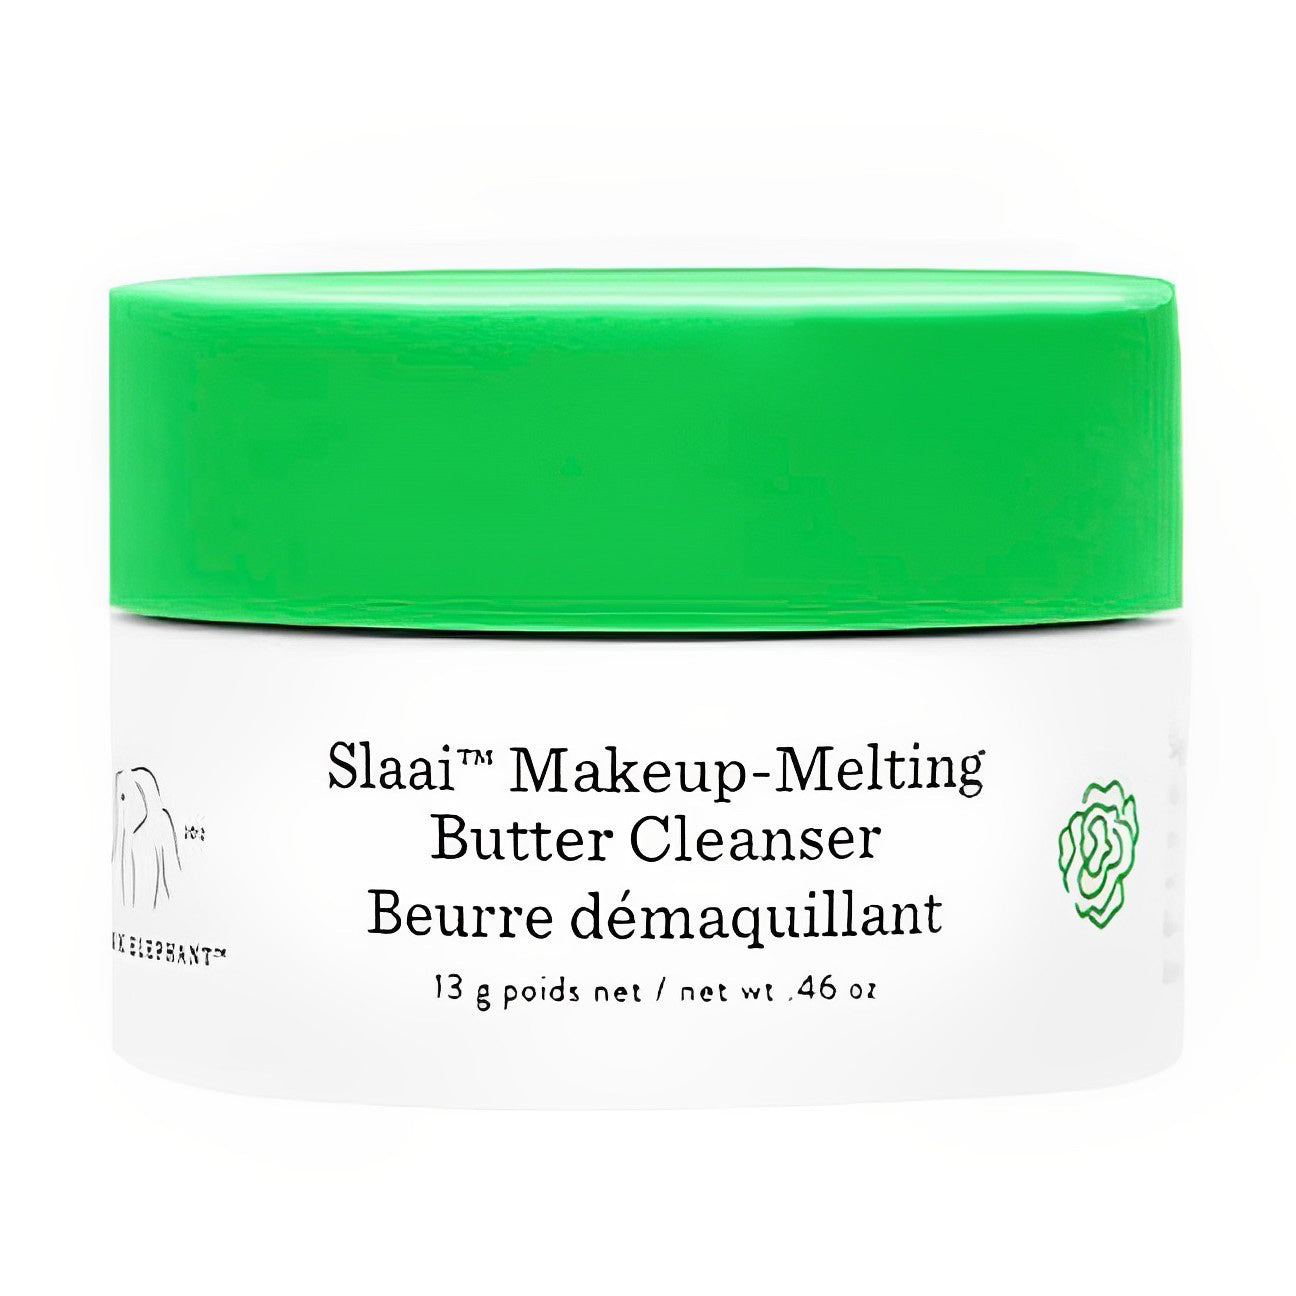 Slaai Makeup-Melting Butter Cleanser trial size-Drunk Elephant